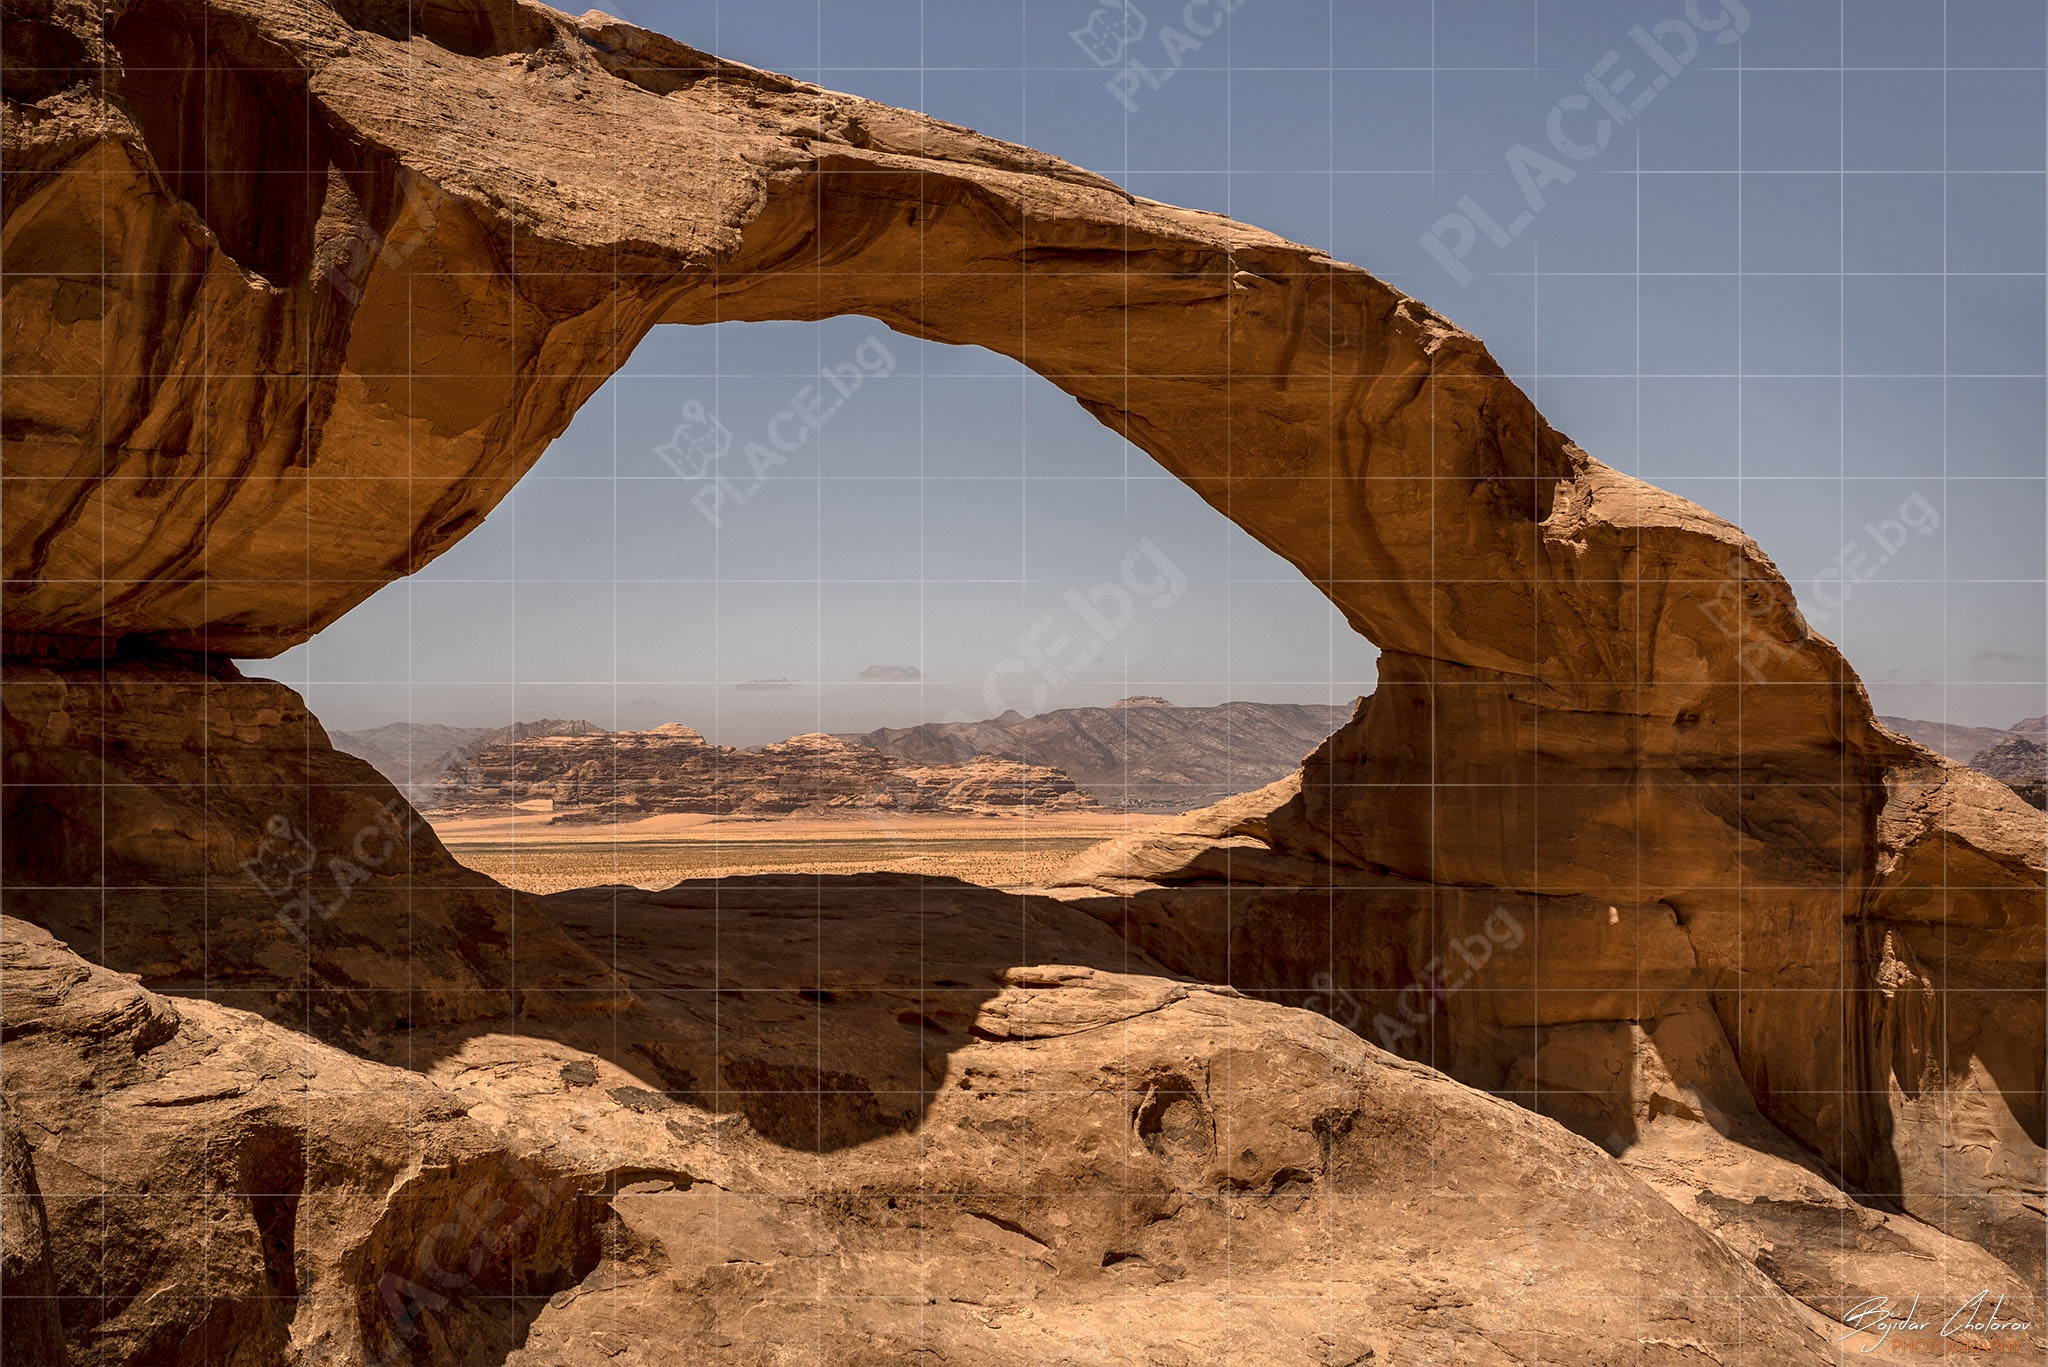 Wadi_Rum_Jeep_Tour_BCH_5016